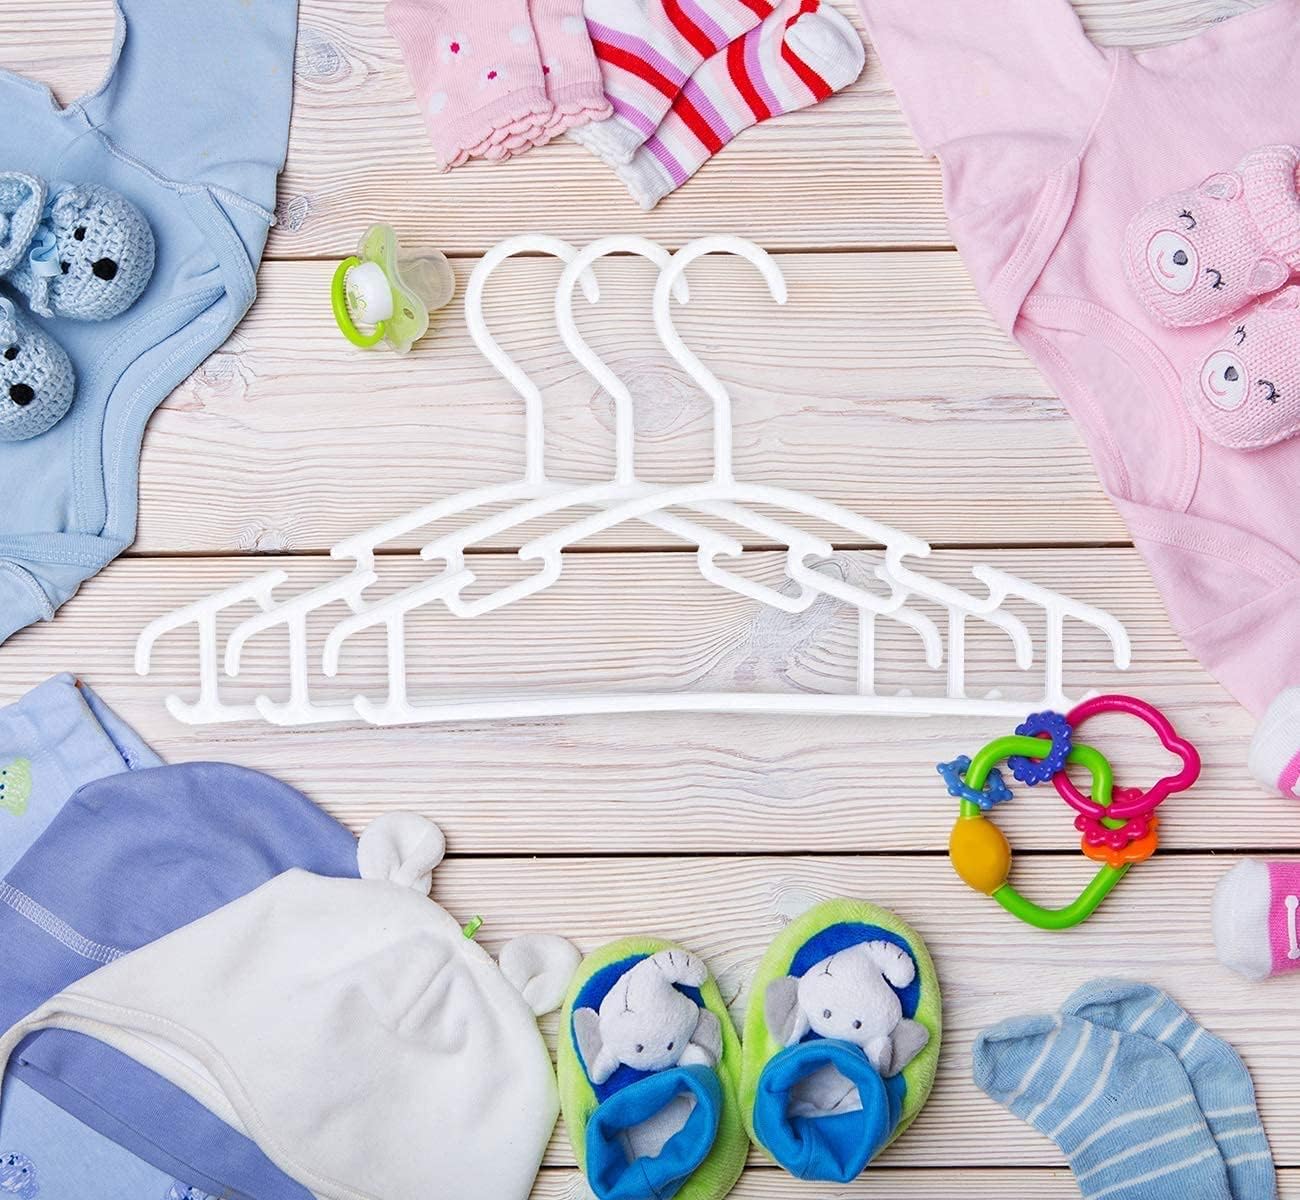 KEPLIN 36 Pack Plastic Baby Hangers, Nonslip Nursery Coat Hangers, Space Saving Tubular Hangers, More Storage for Kids Children Clothes Dresses Unisex (27x15cm) White 7972